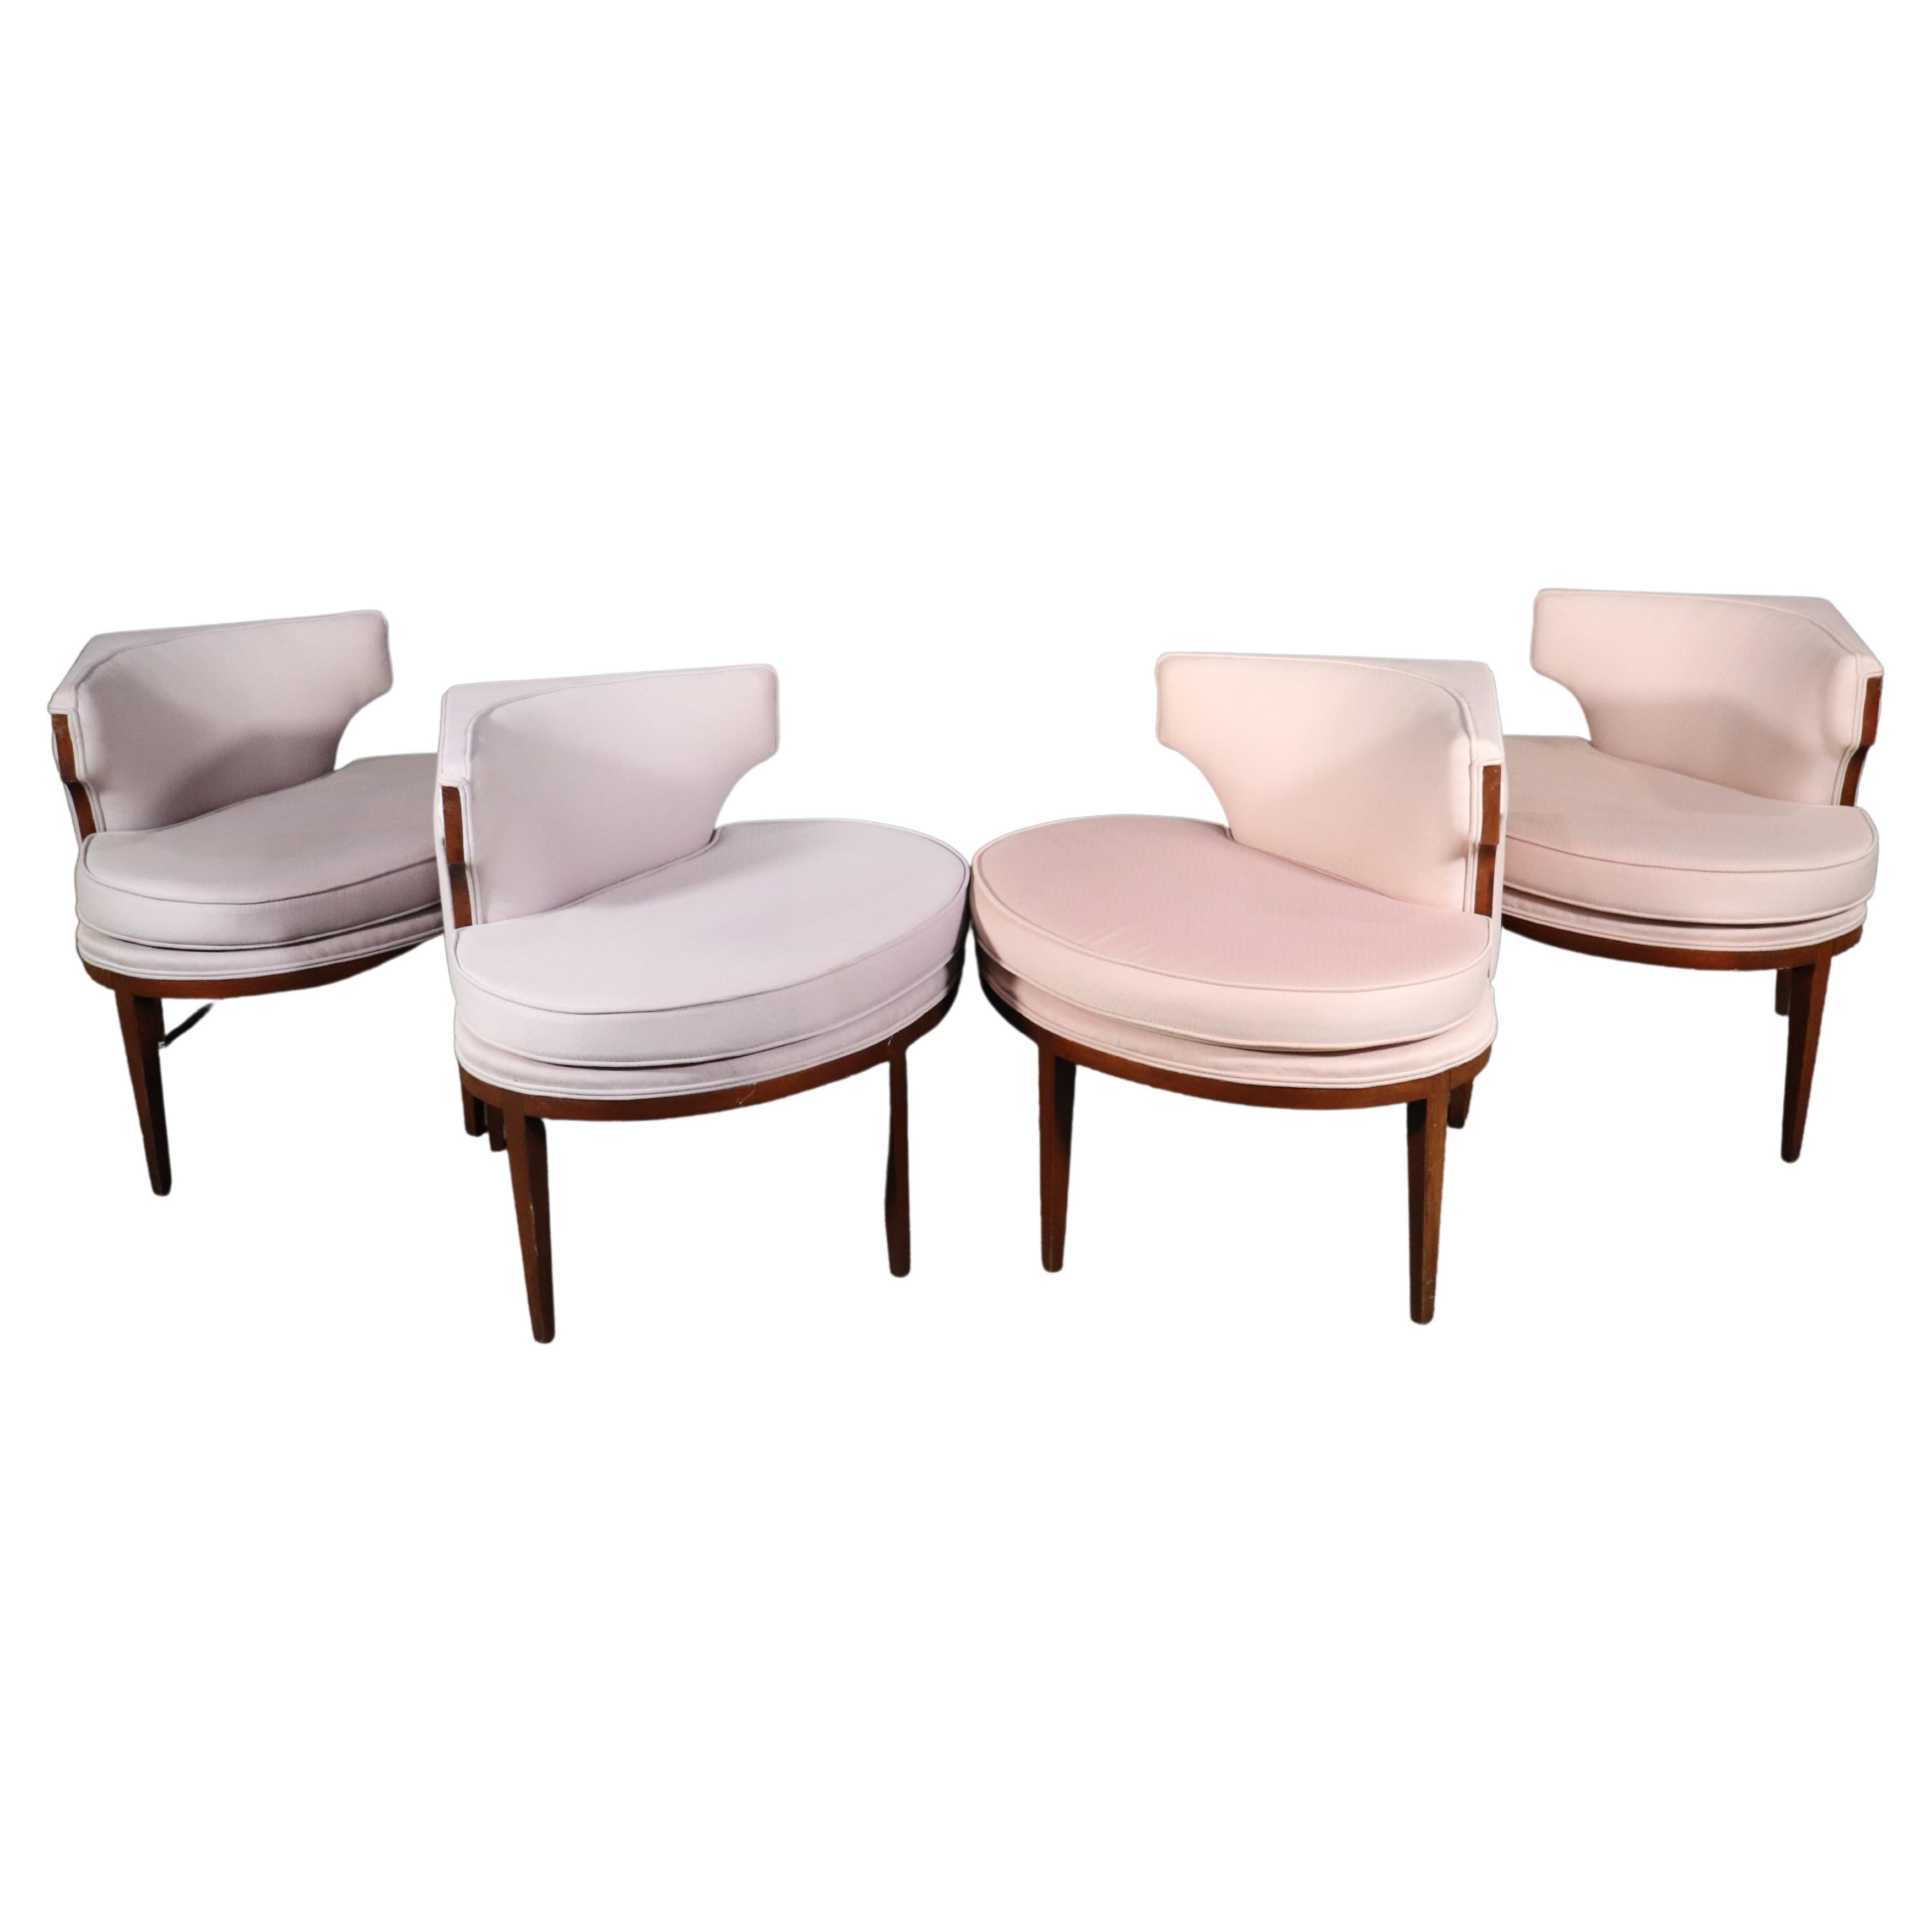 Four Vintage Modern Corner Chairs